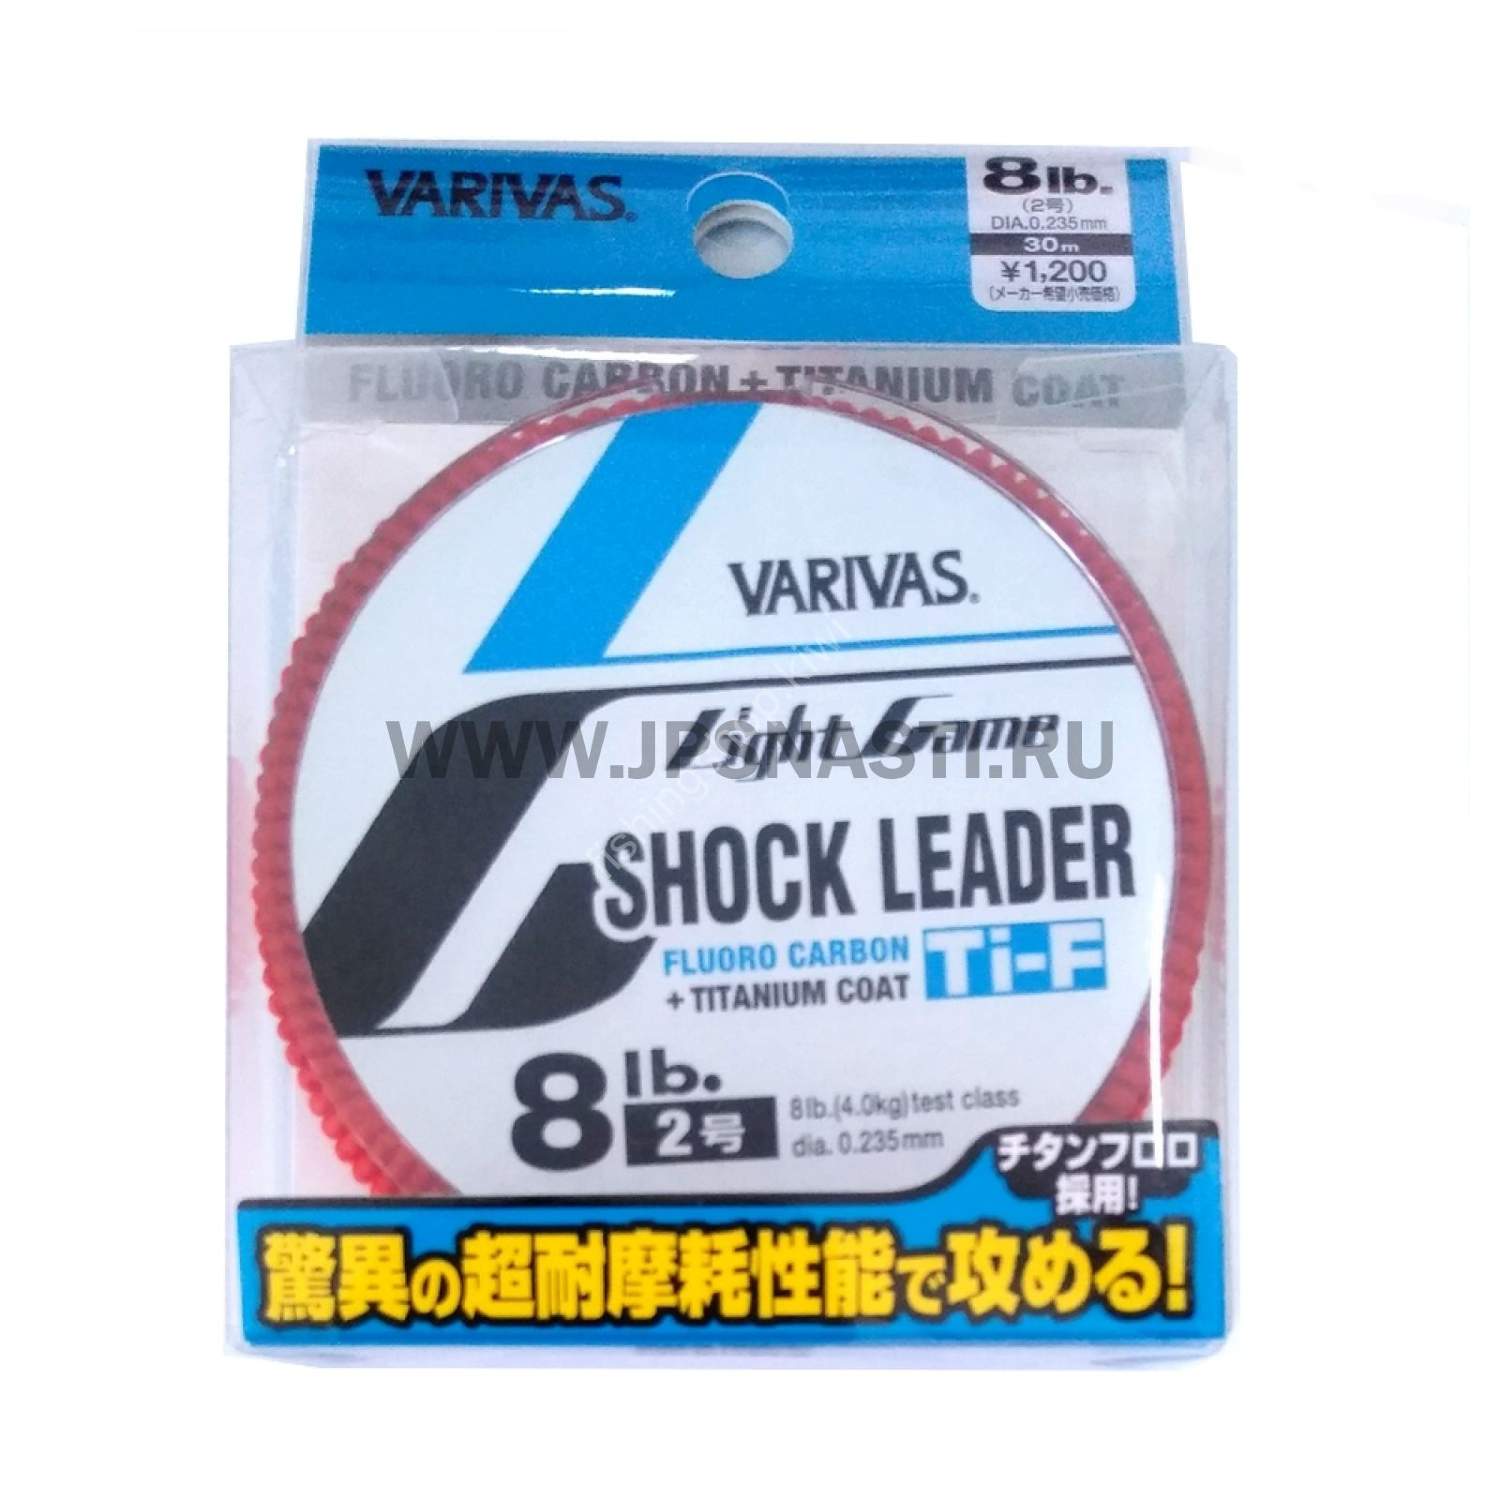 Light Game Shock Leader Fluorocarbon Ti-F